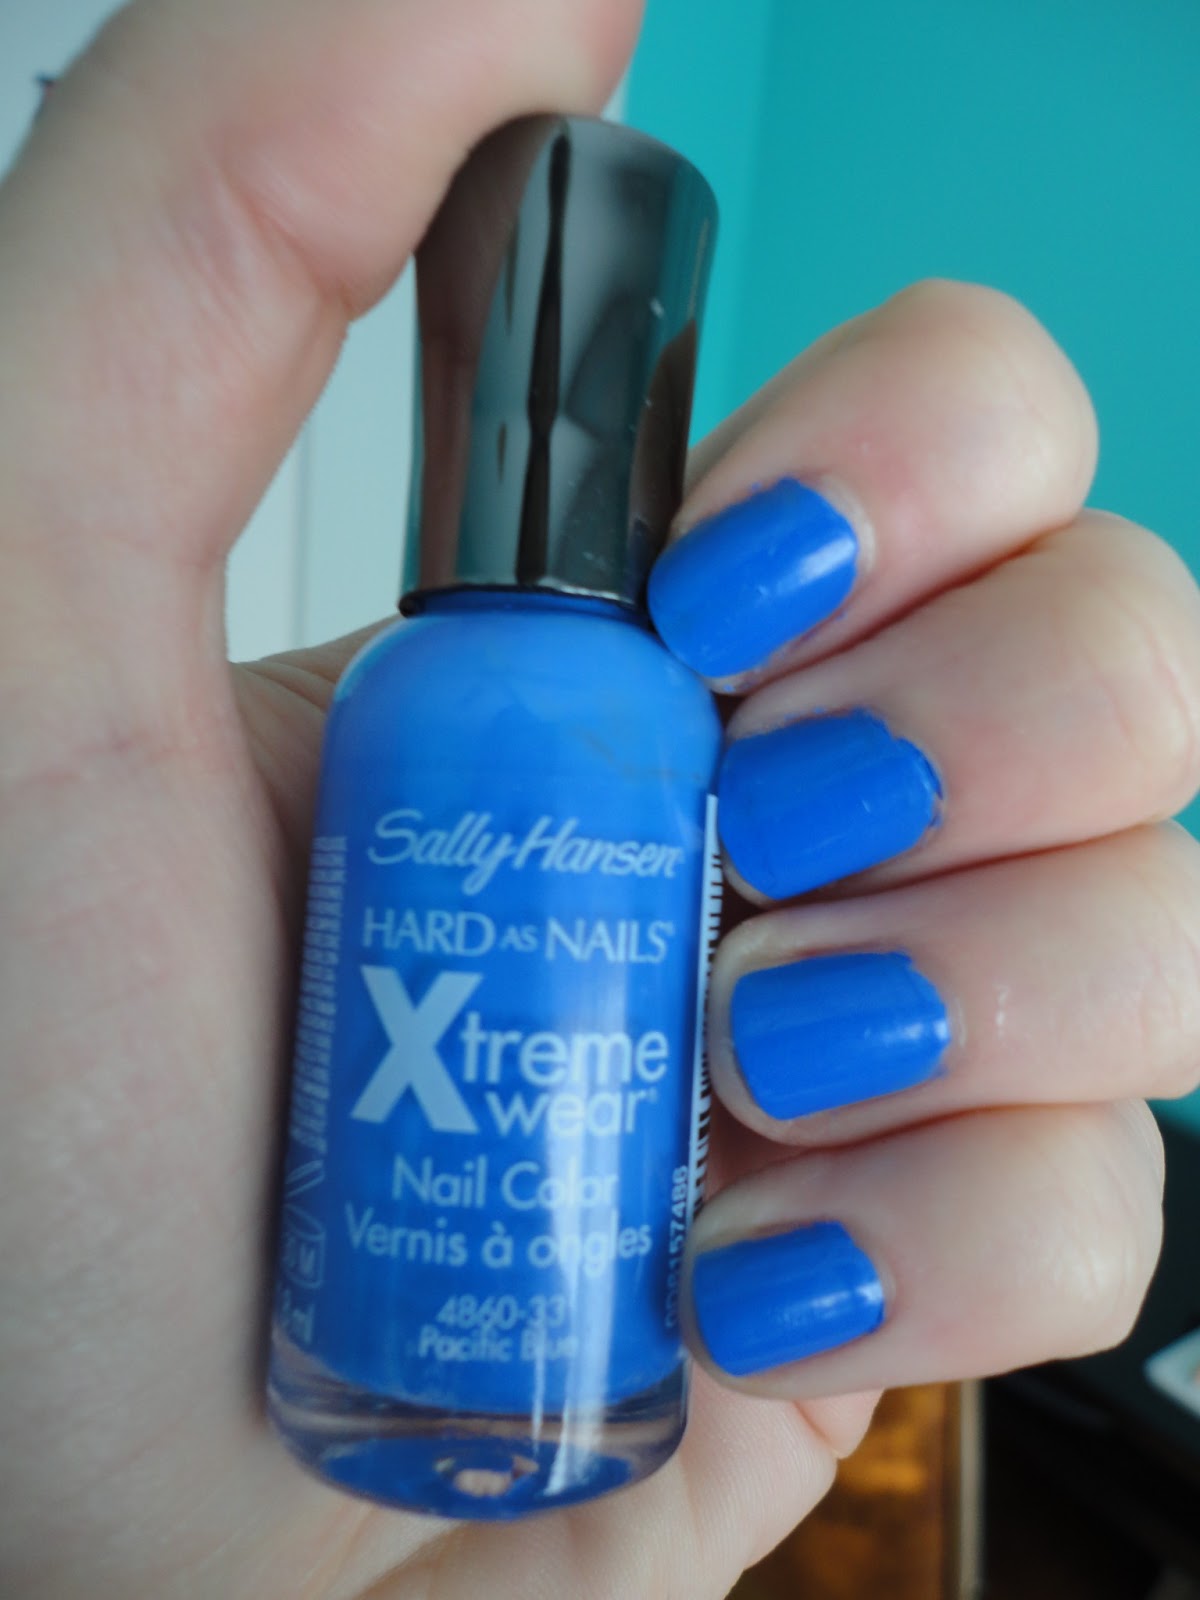 Sally Hansen Xtreme Wear Nail Polish in Pacific Blue | Natalie Loves Beauty